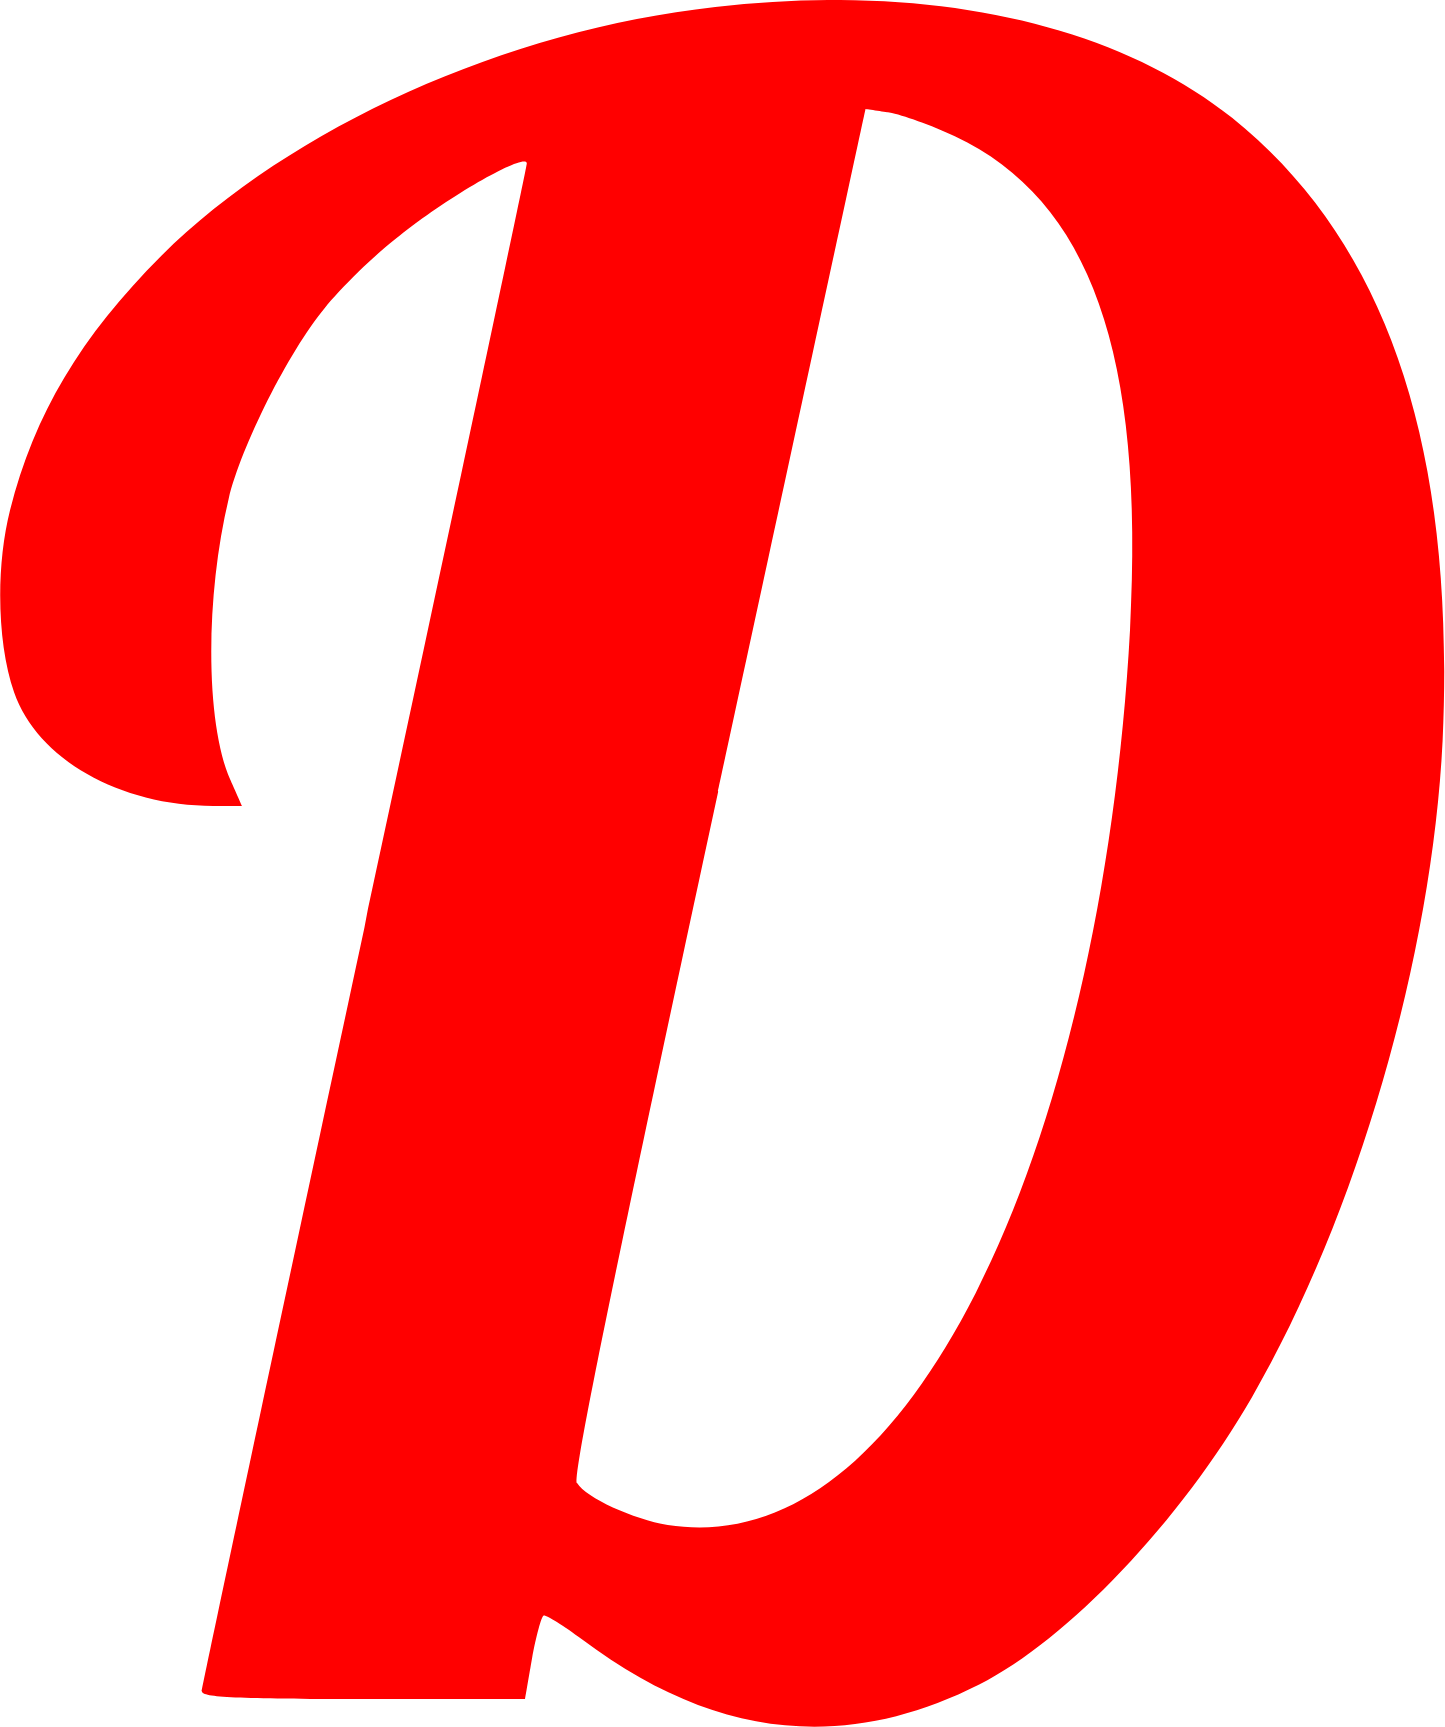 Digital Bros logo in transparent PNG and vectorized SVG formats